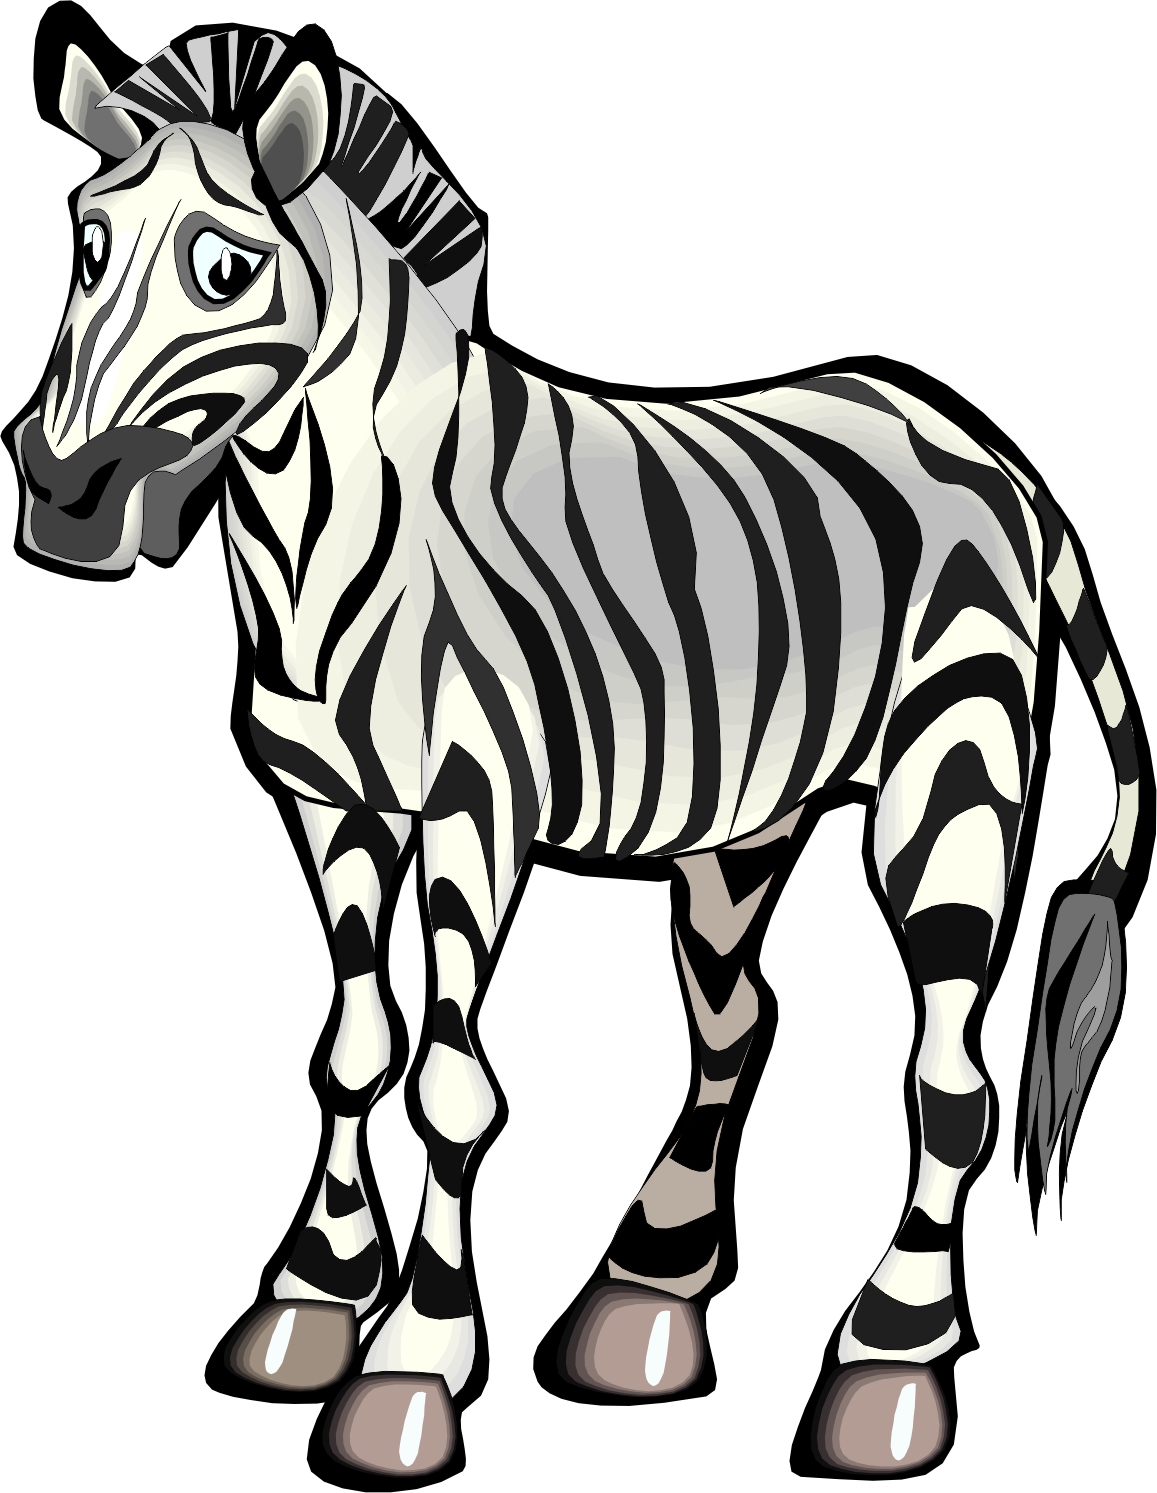 zebra cartoon images